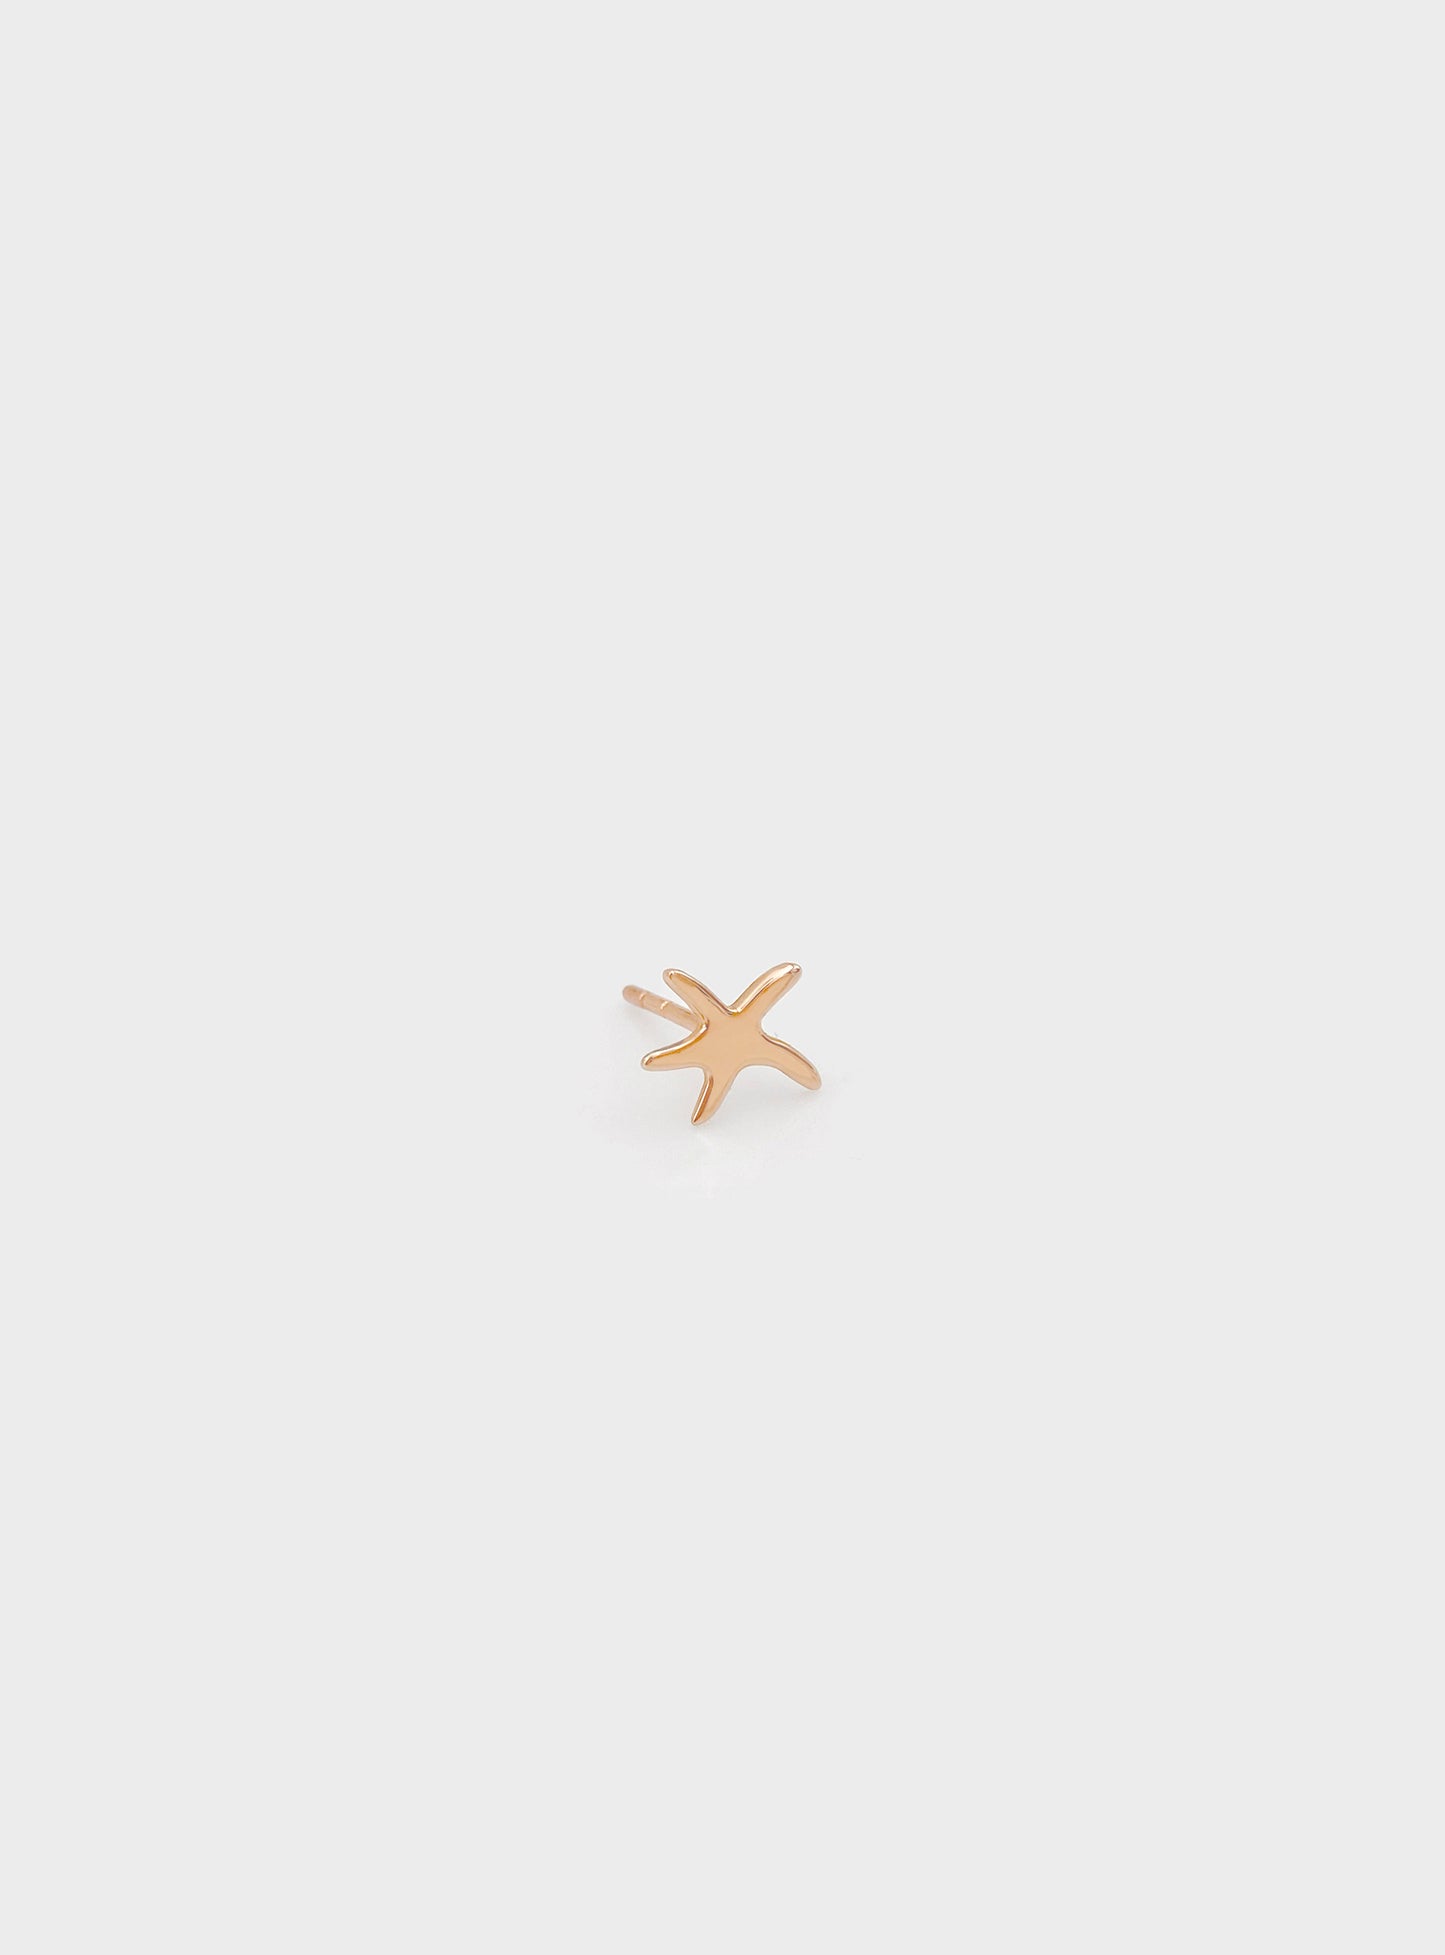 Visions Sea Star Stud, single earring